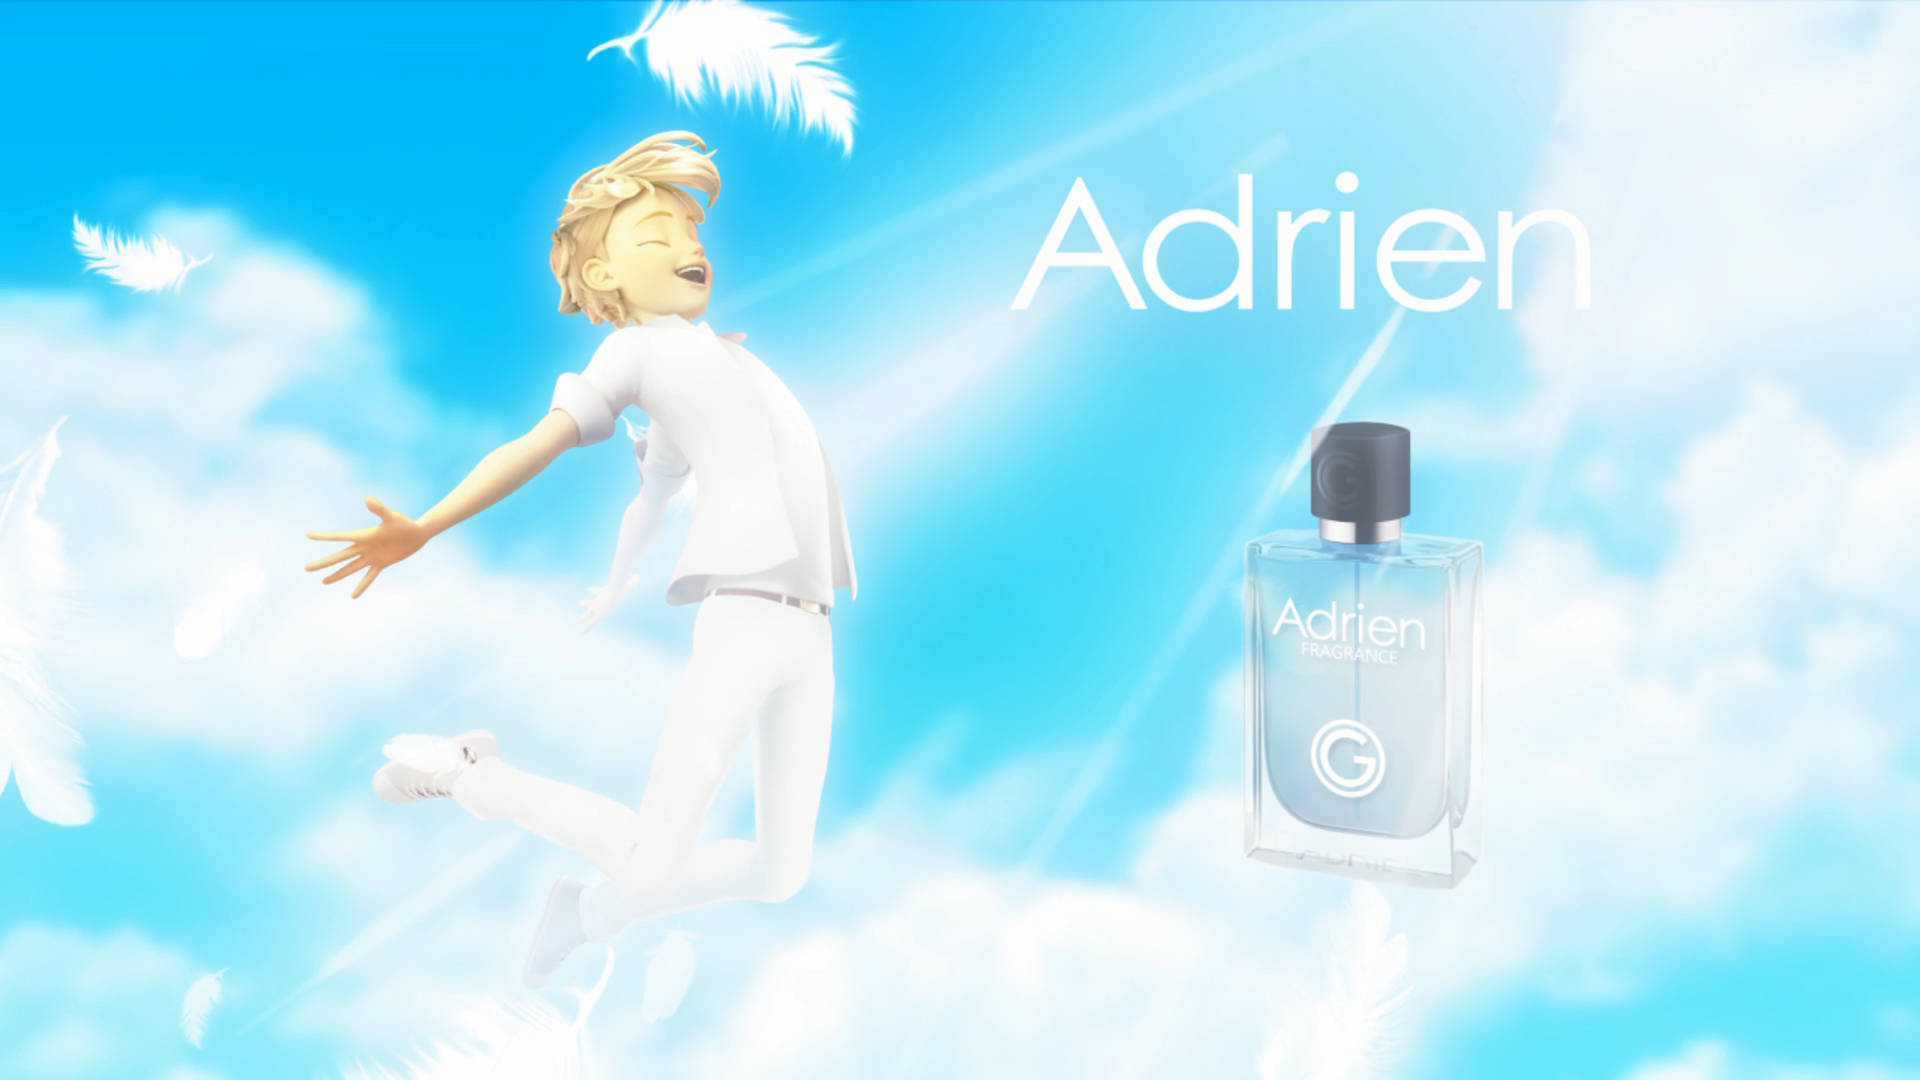 Adrien Agreste Fragrance Ad Background